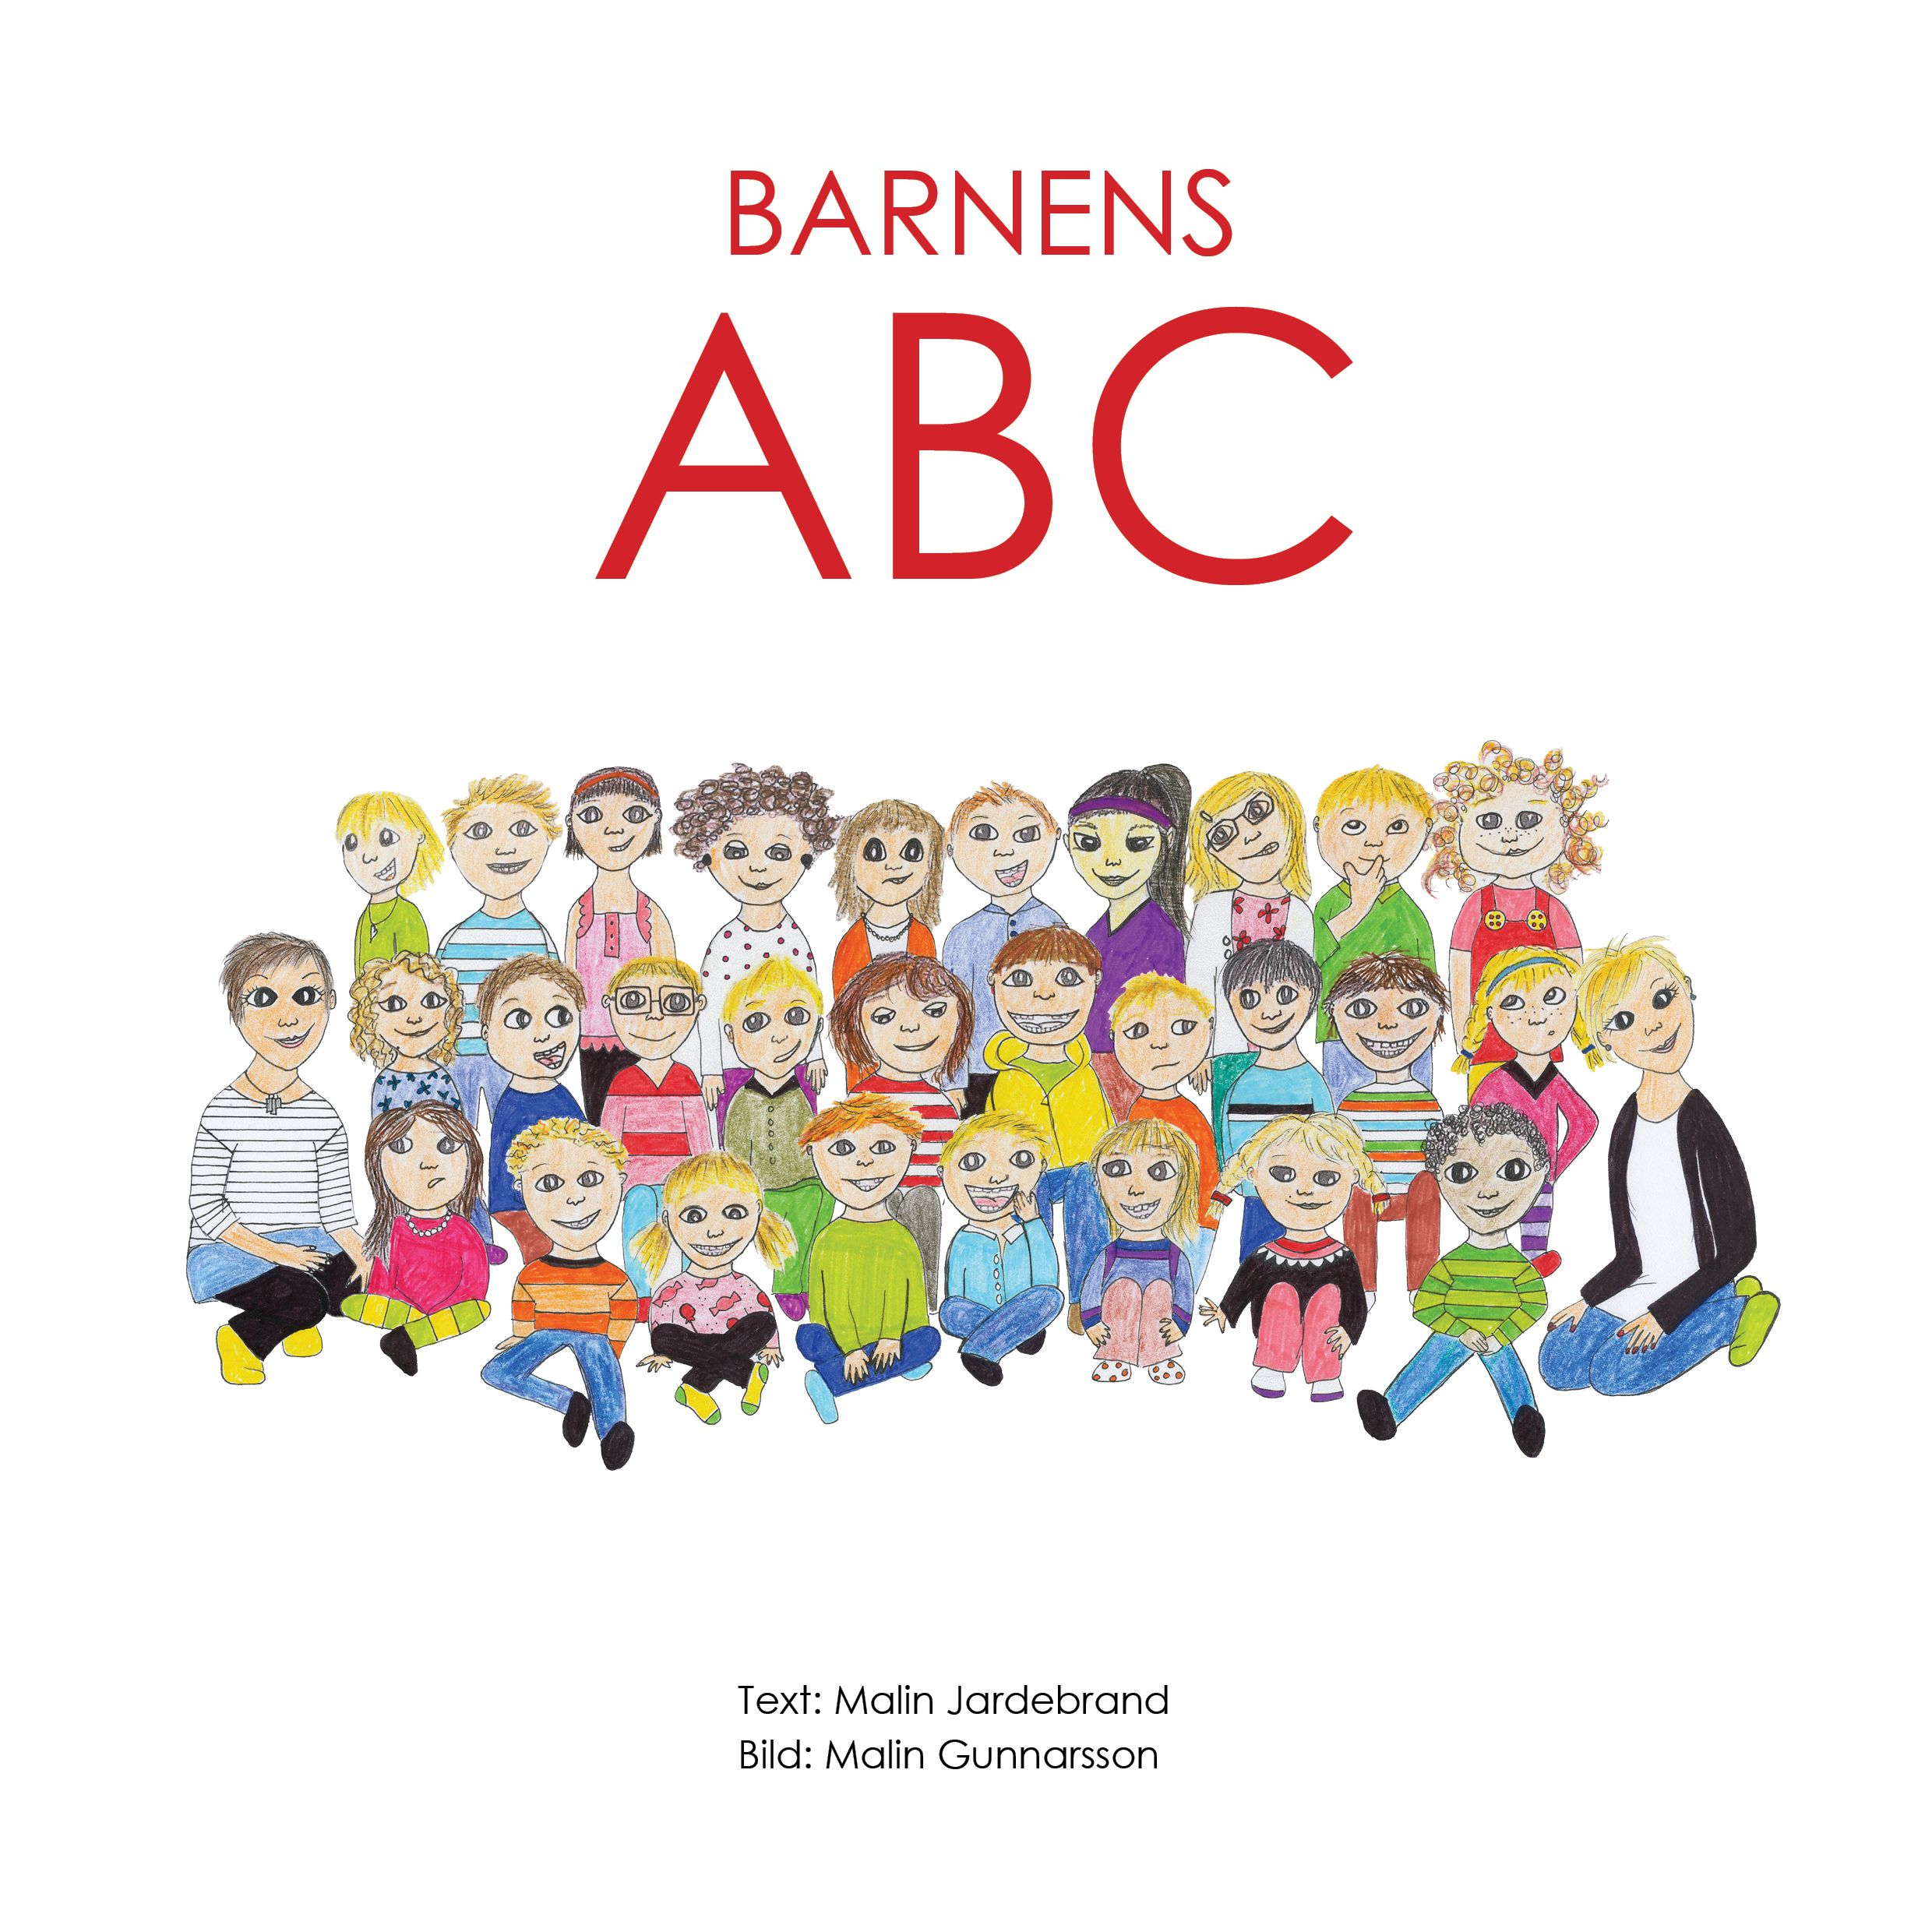 Barnens ABC, e-bok av Malin Jardebrand